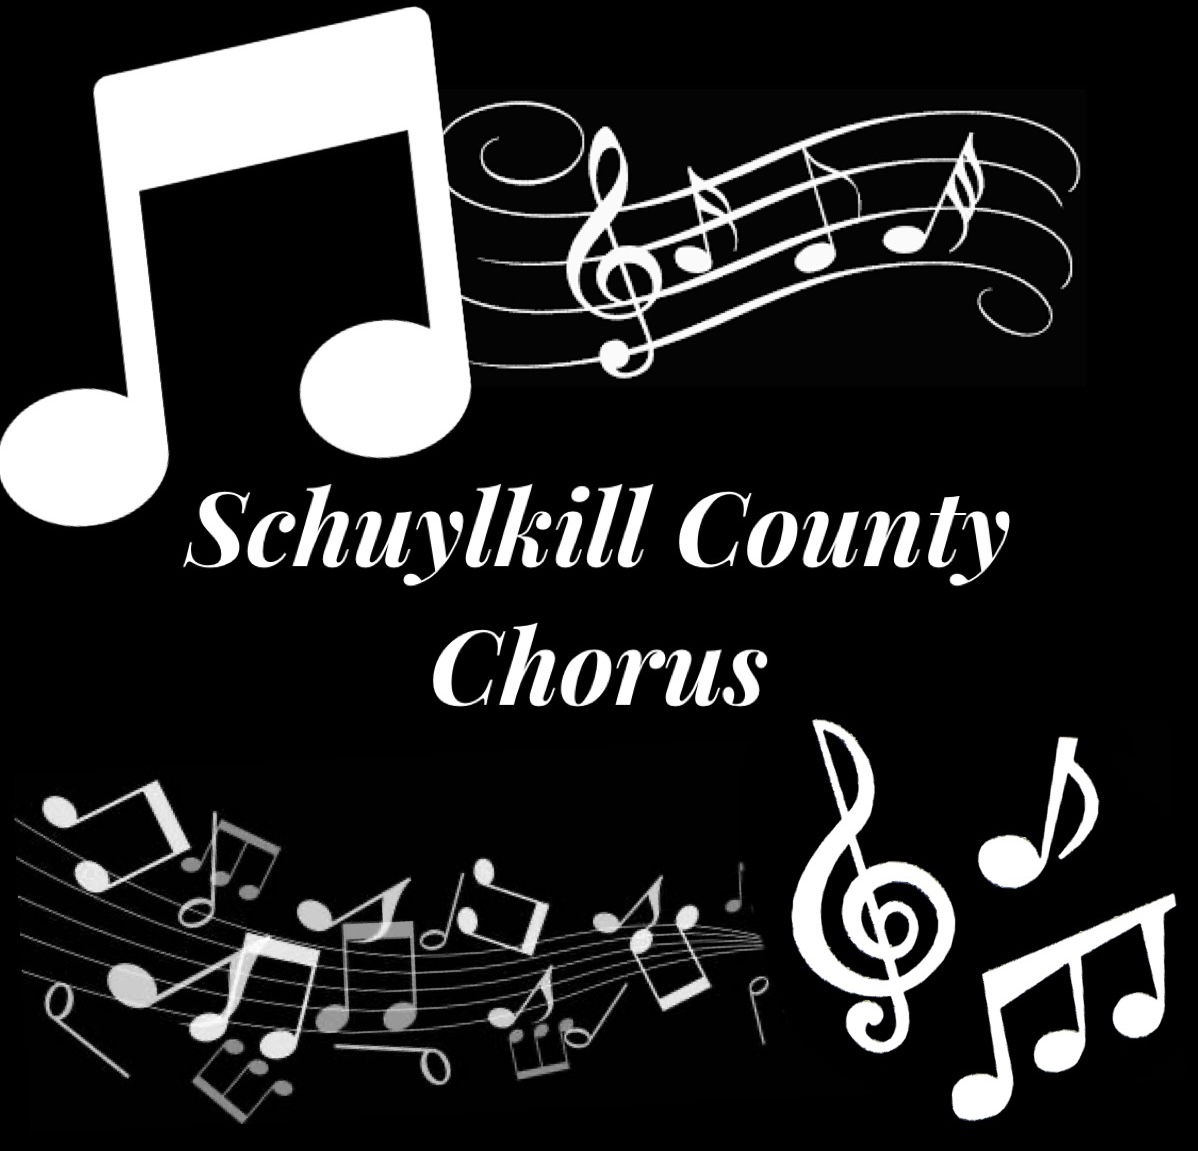 An artistic rendition of Schuylkill County Chorus made through a digital medium.